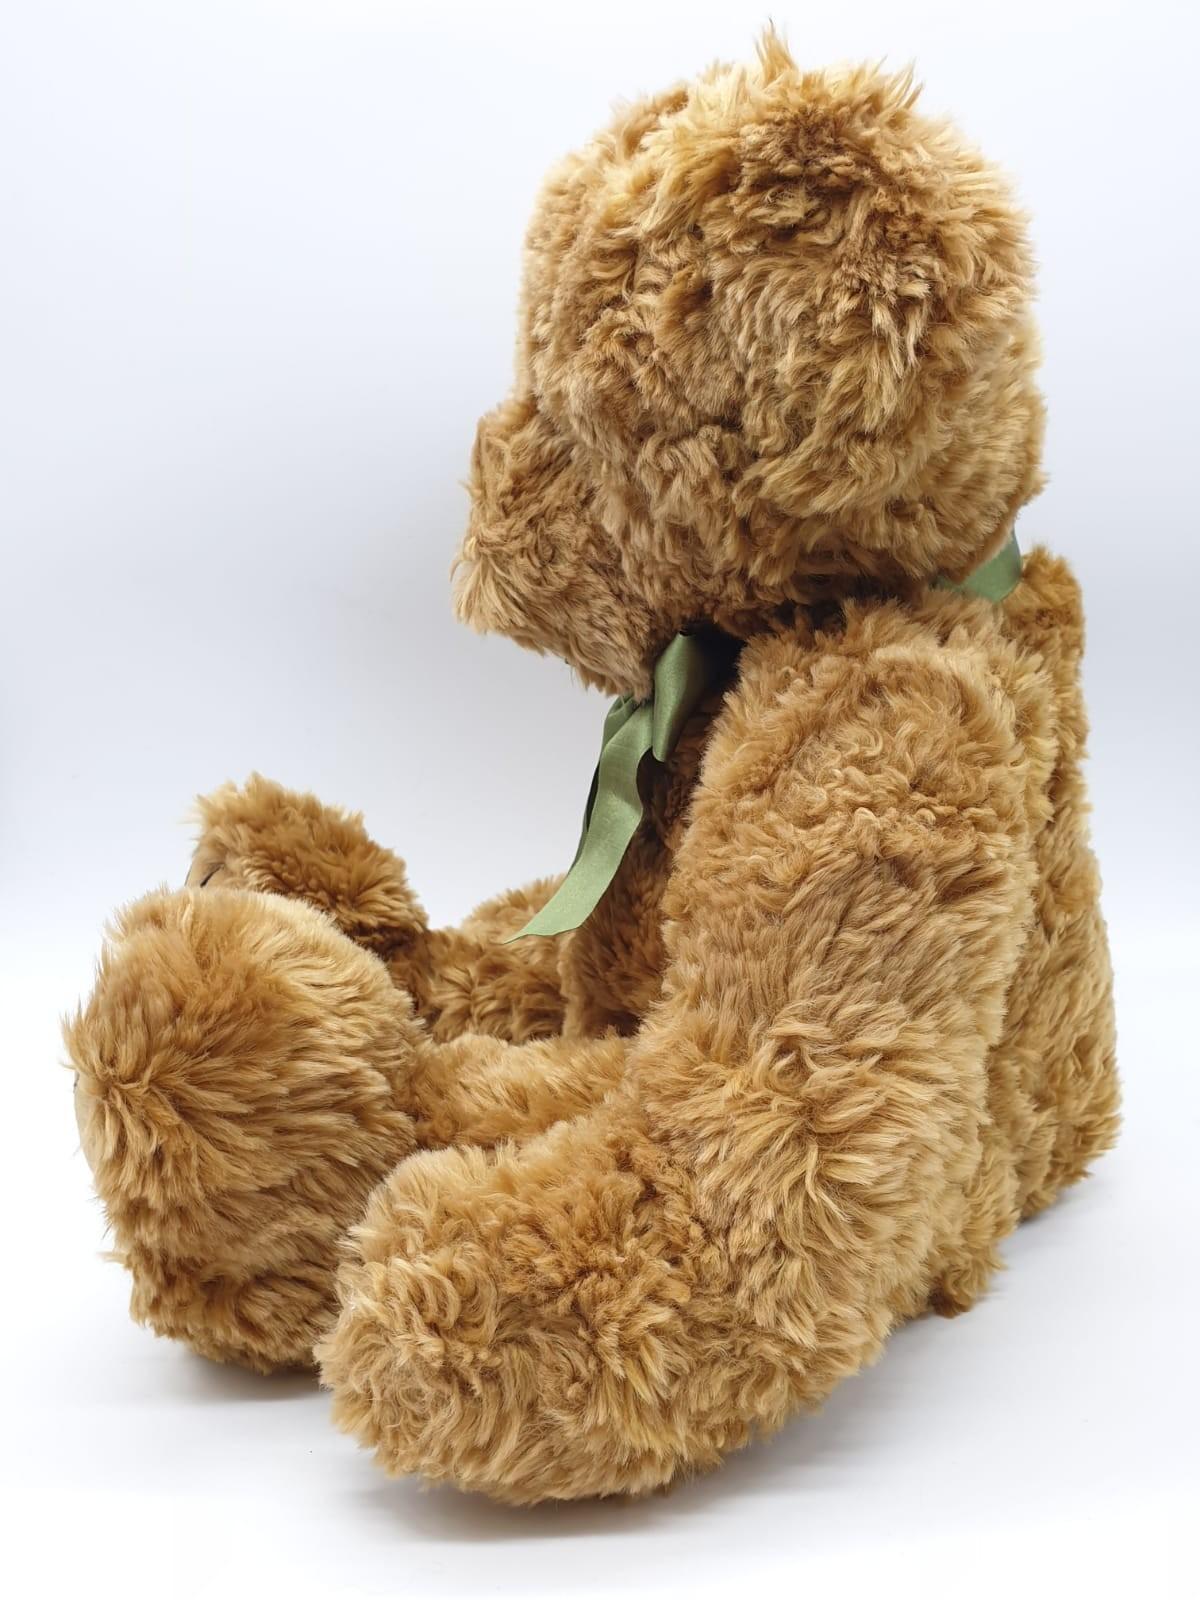 A Harrods Teddy Bear 1990's Approx 30cms - Image 2 of 6